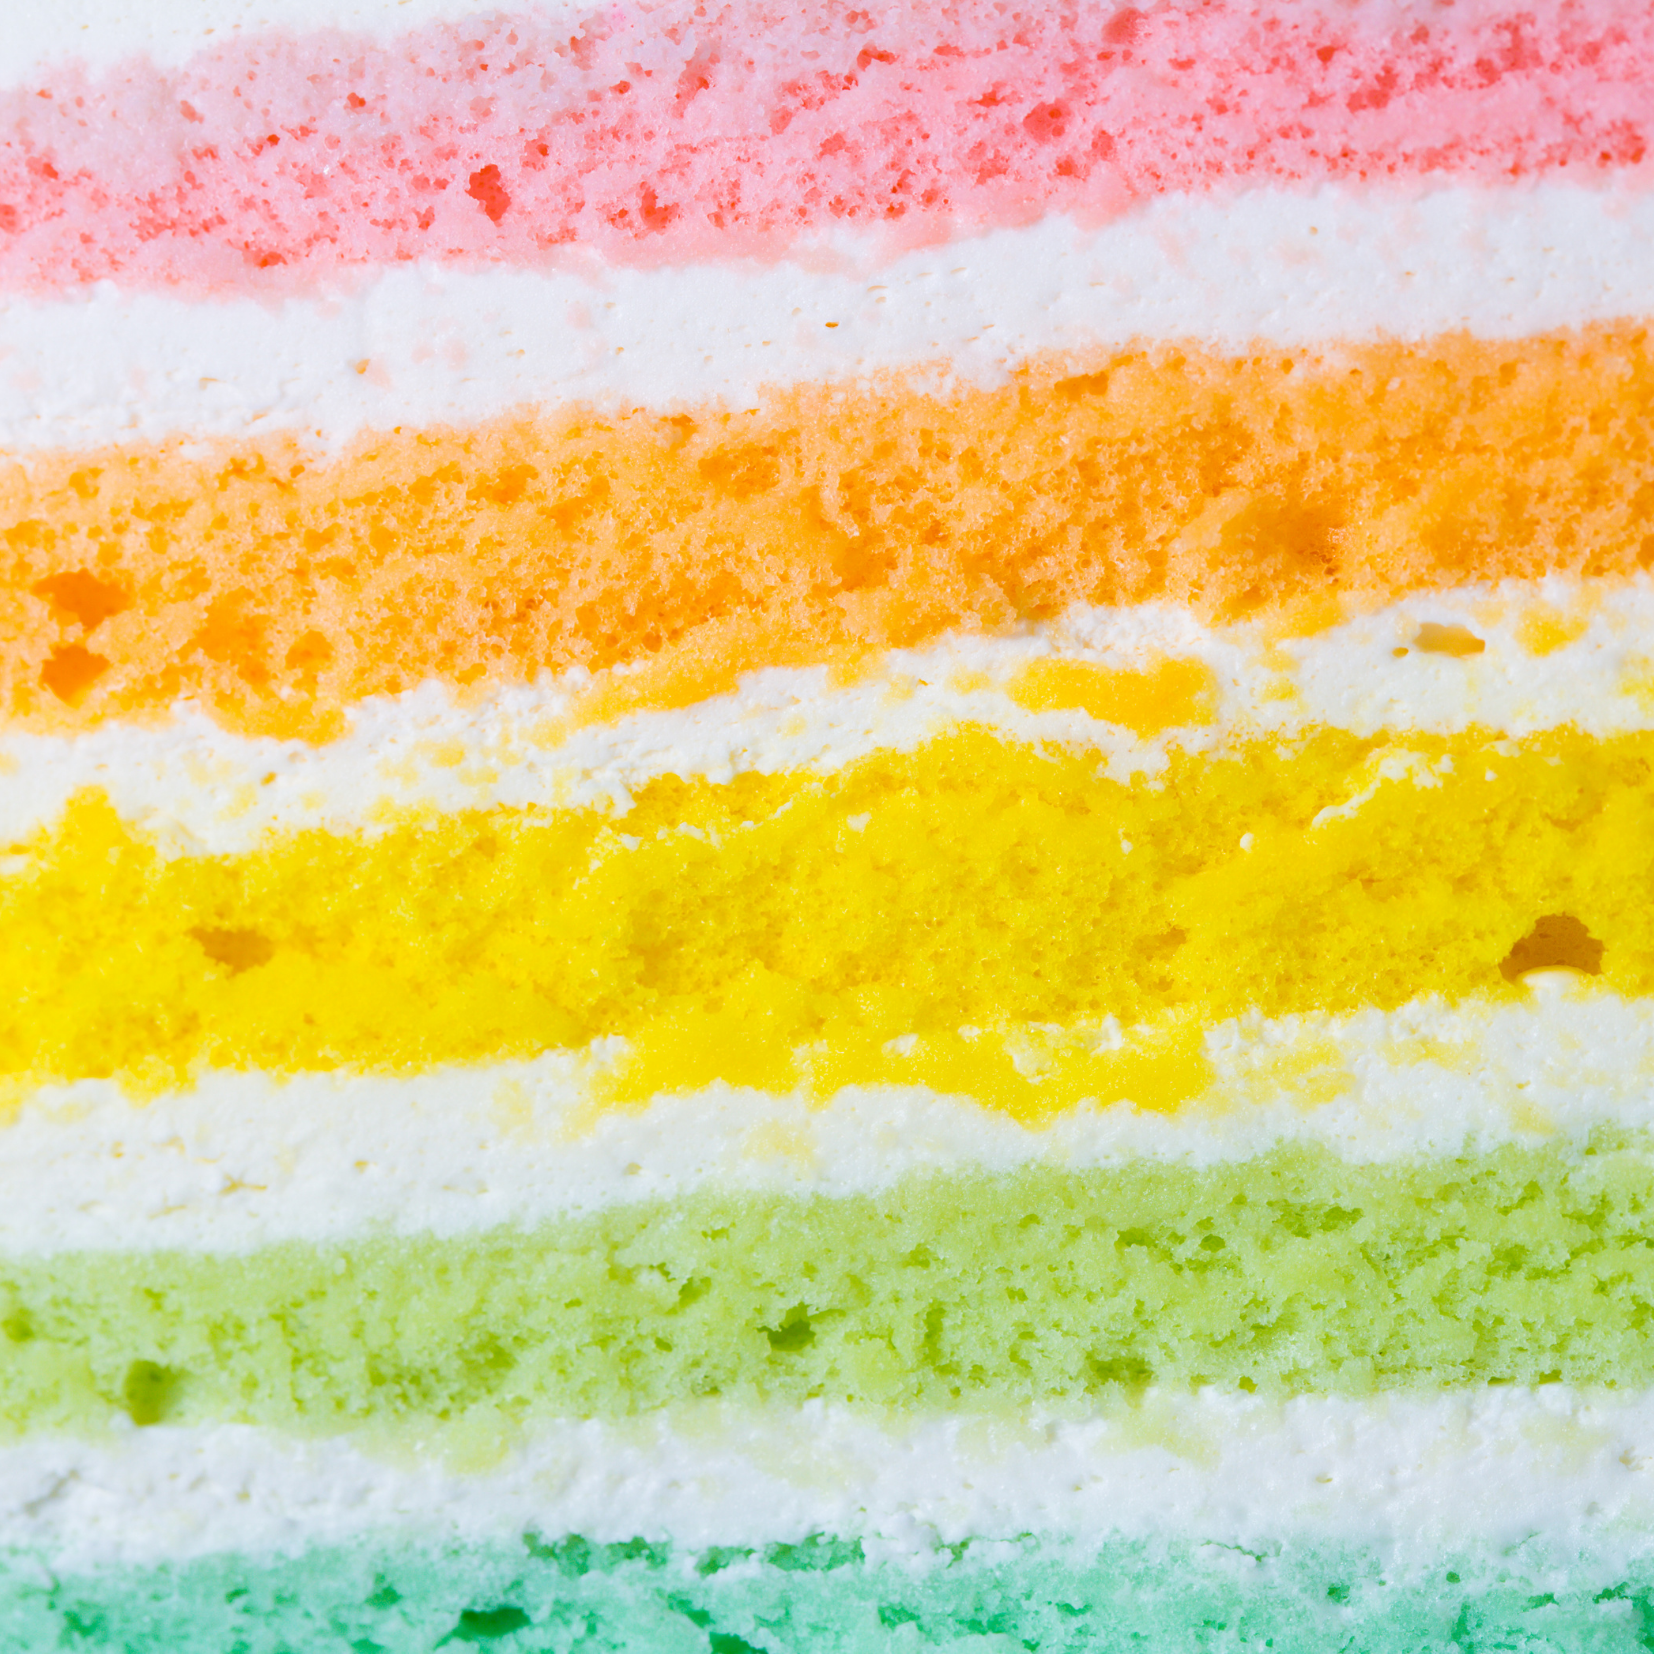 Rainbow cake slice depicting Disordered Eating